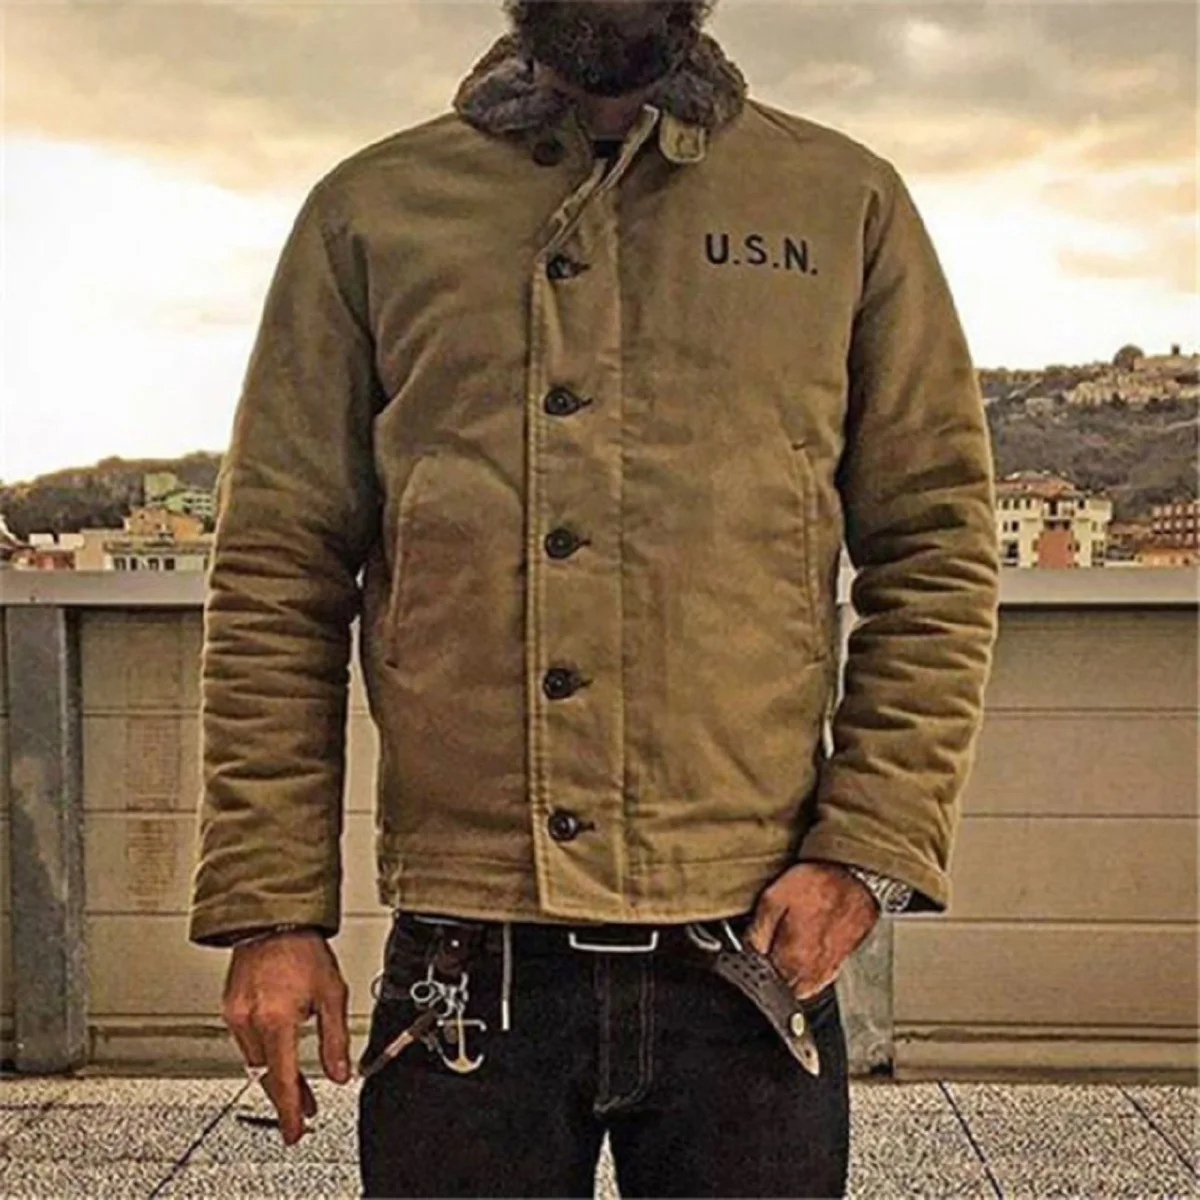 

OKONKWO U.S.N DECK N-1 COAT Jacket Vintage USN Military Uniform Tactical Lamb Wool Thick Warm Coats N1